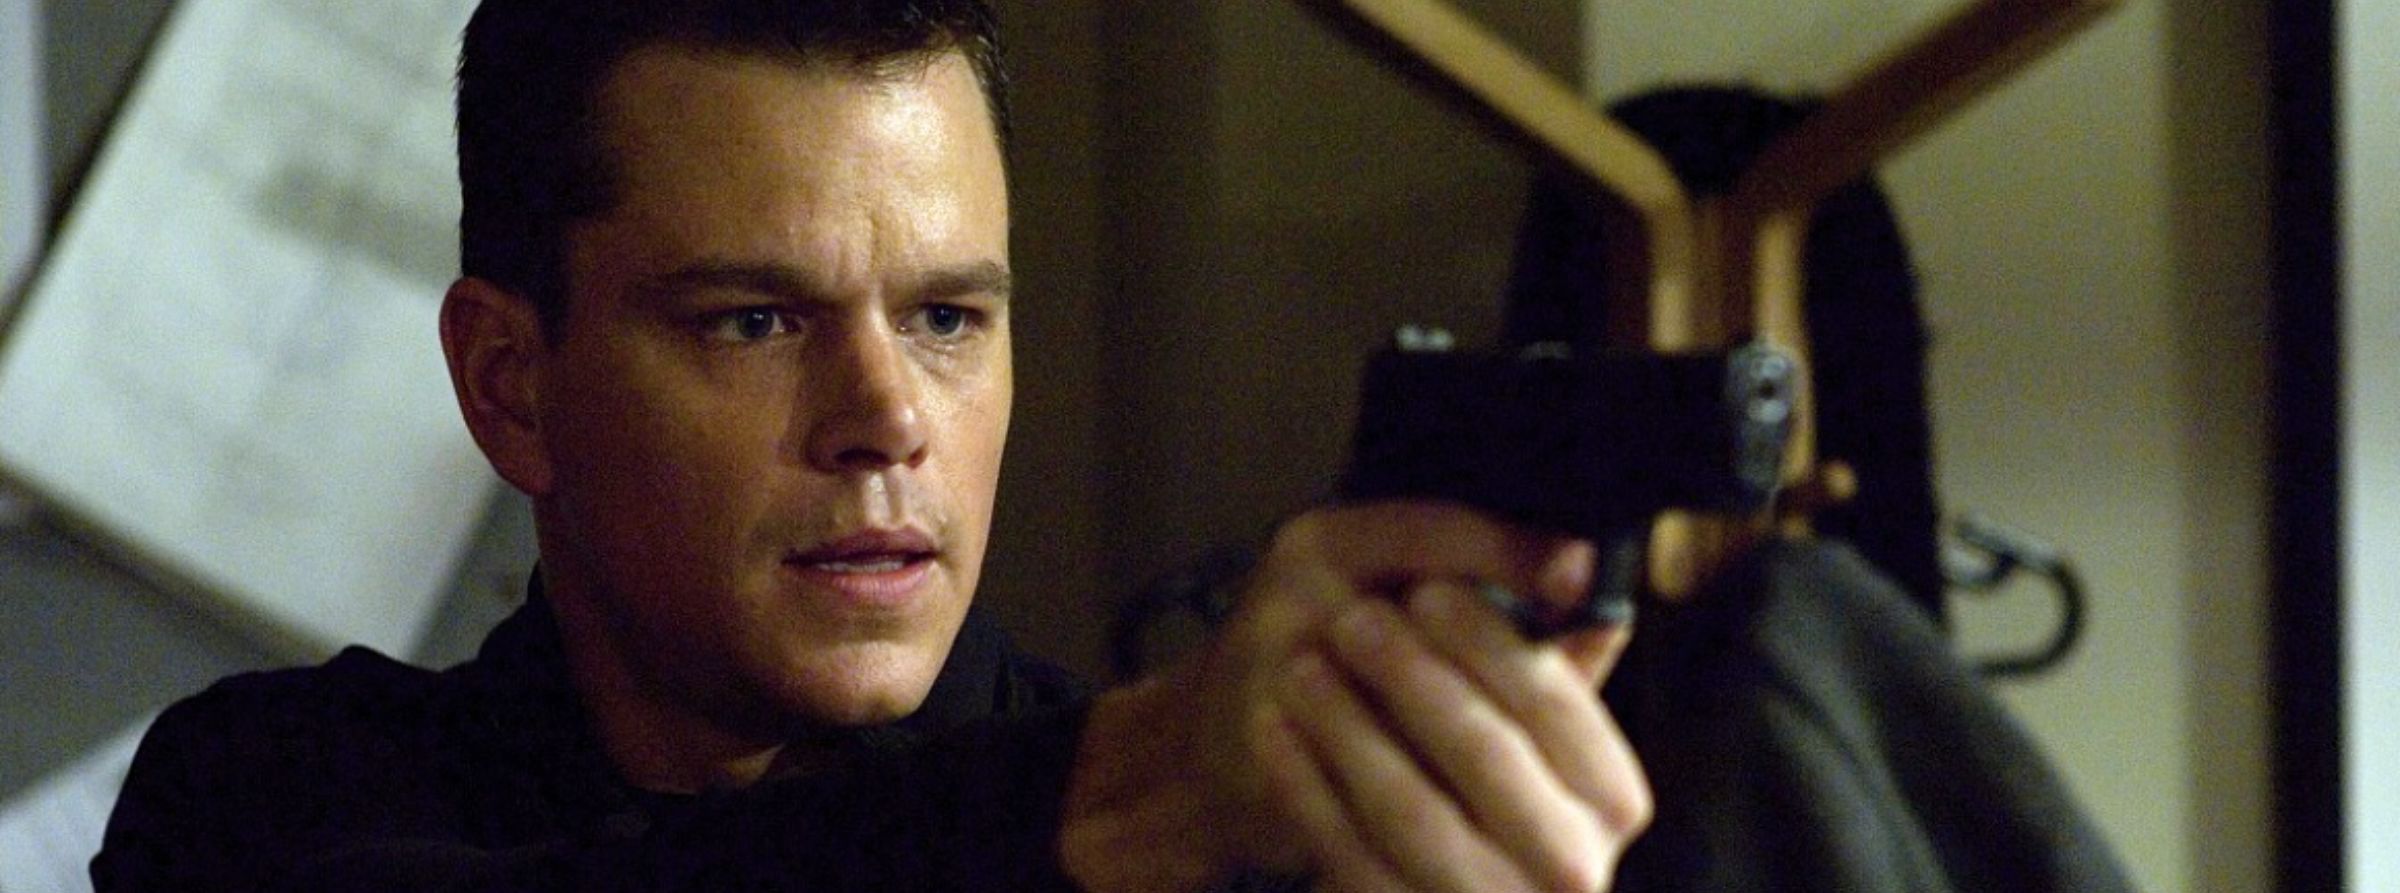 Matt Damon, as Jason Bourne in 2002 hit The Bourne Identity. (Source: Wikipedia)